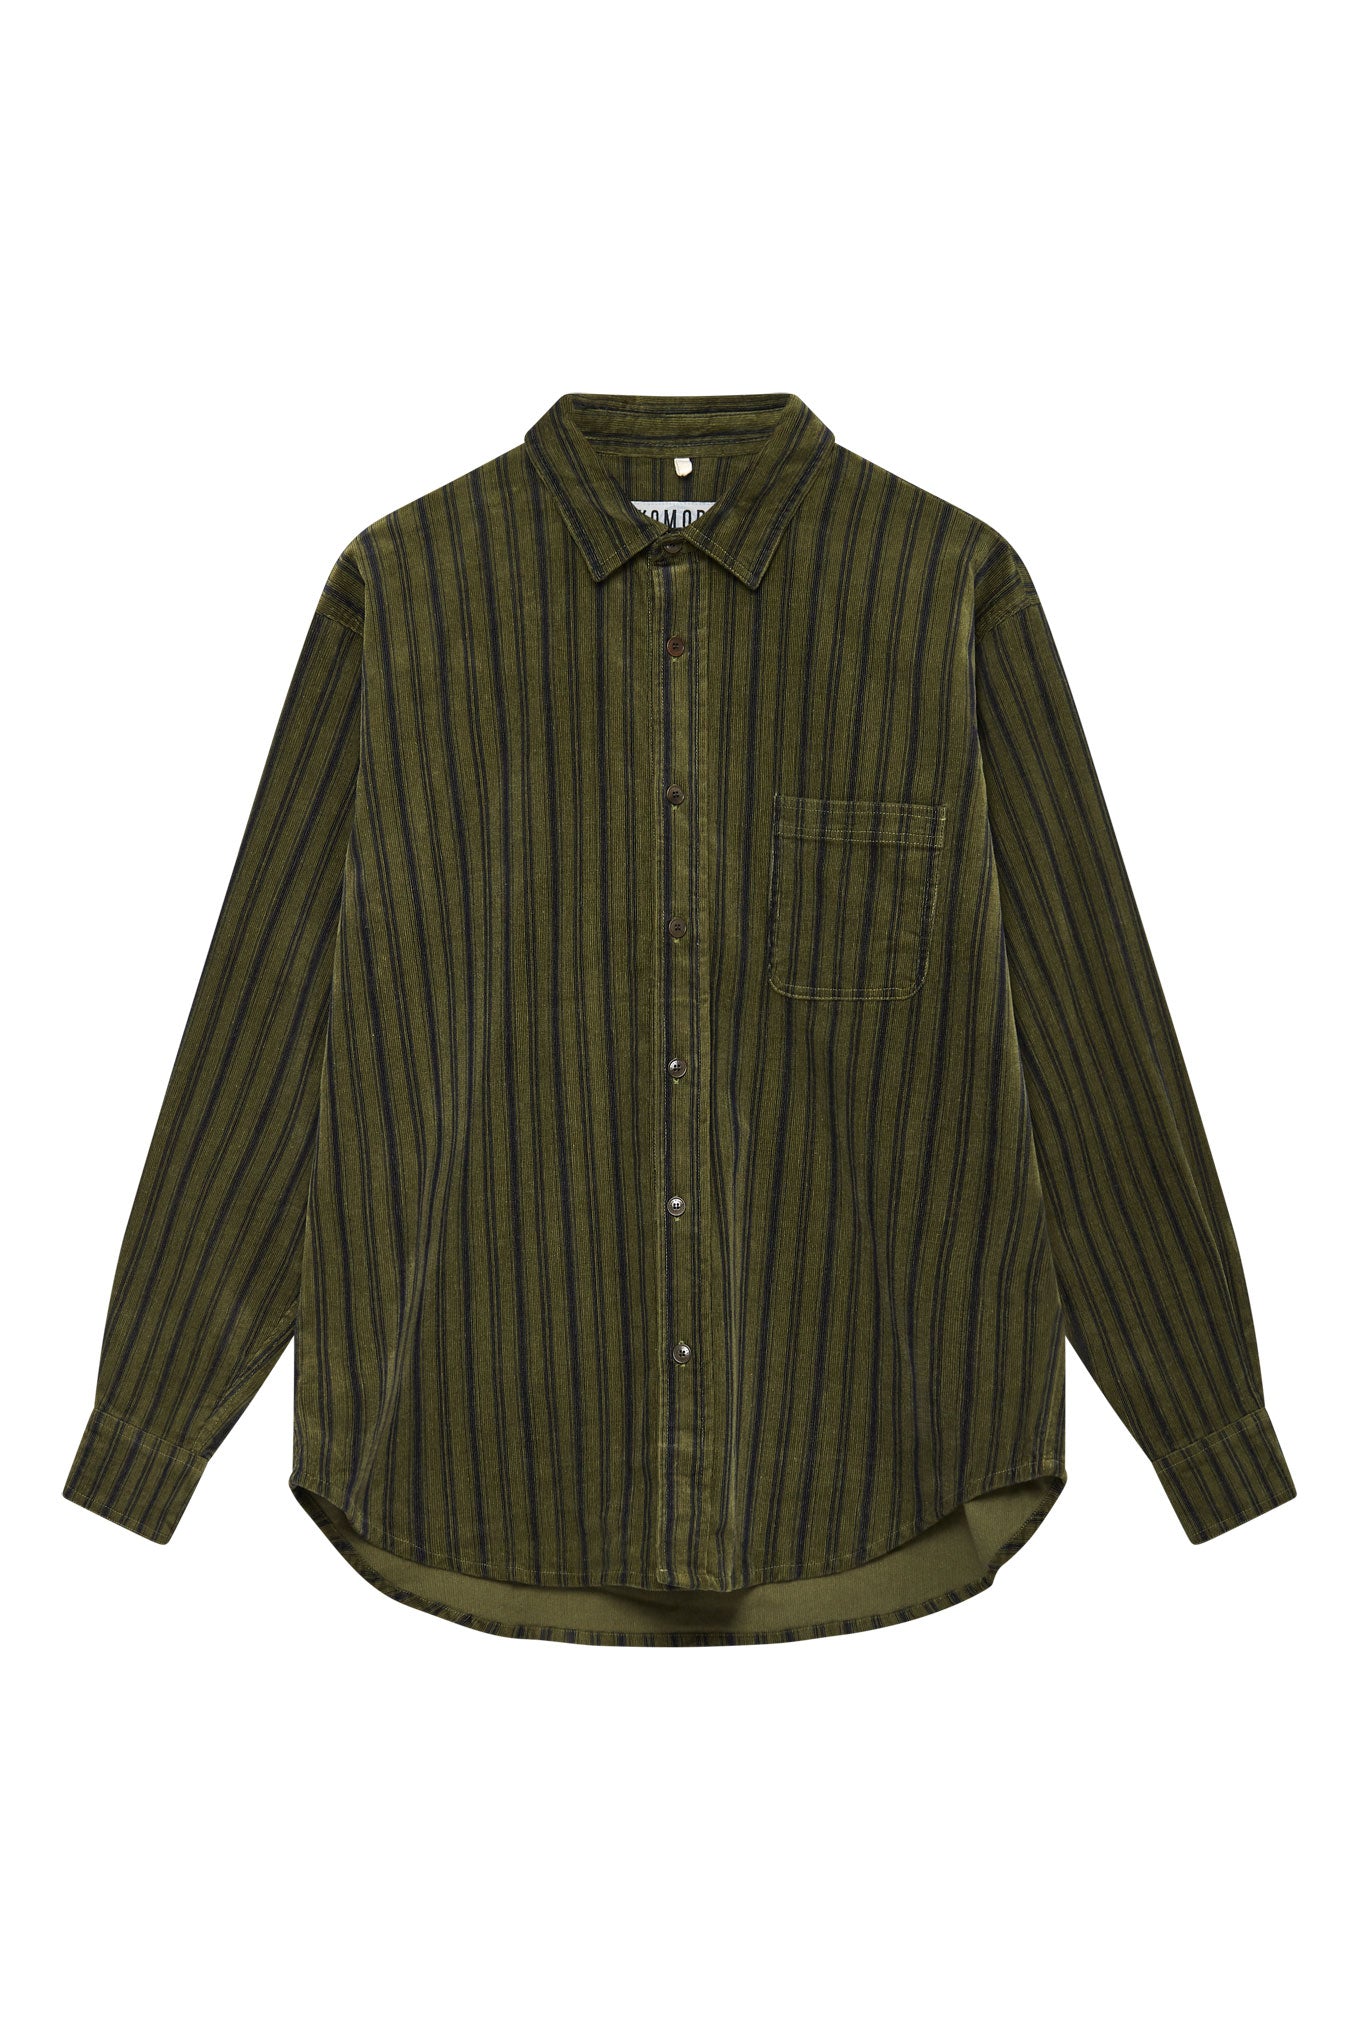 JAX - Organic Cotton Cord Shirt Green Stripe